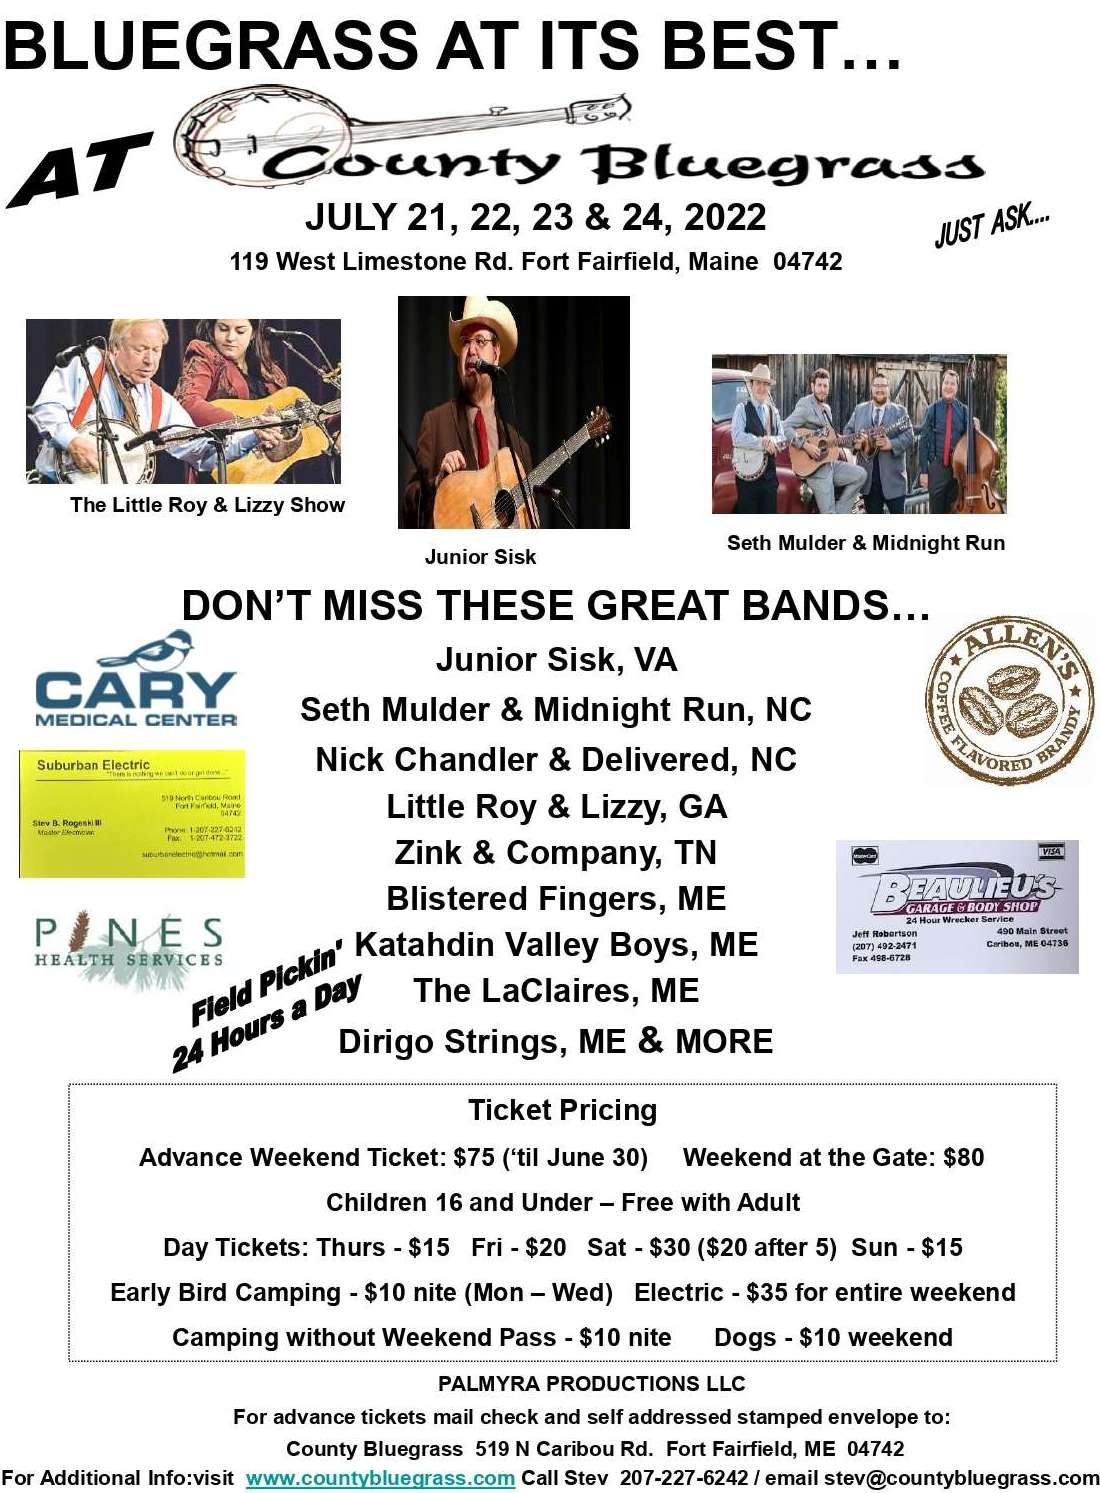 County Bluegrass Maine Bluegrass Music Festival & Concert Venue